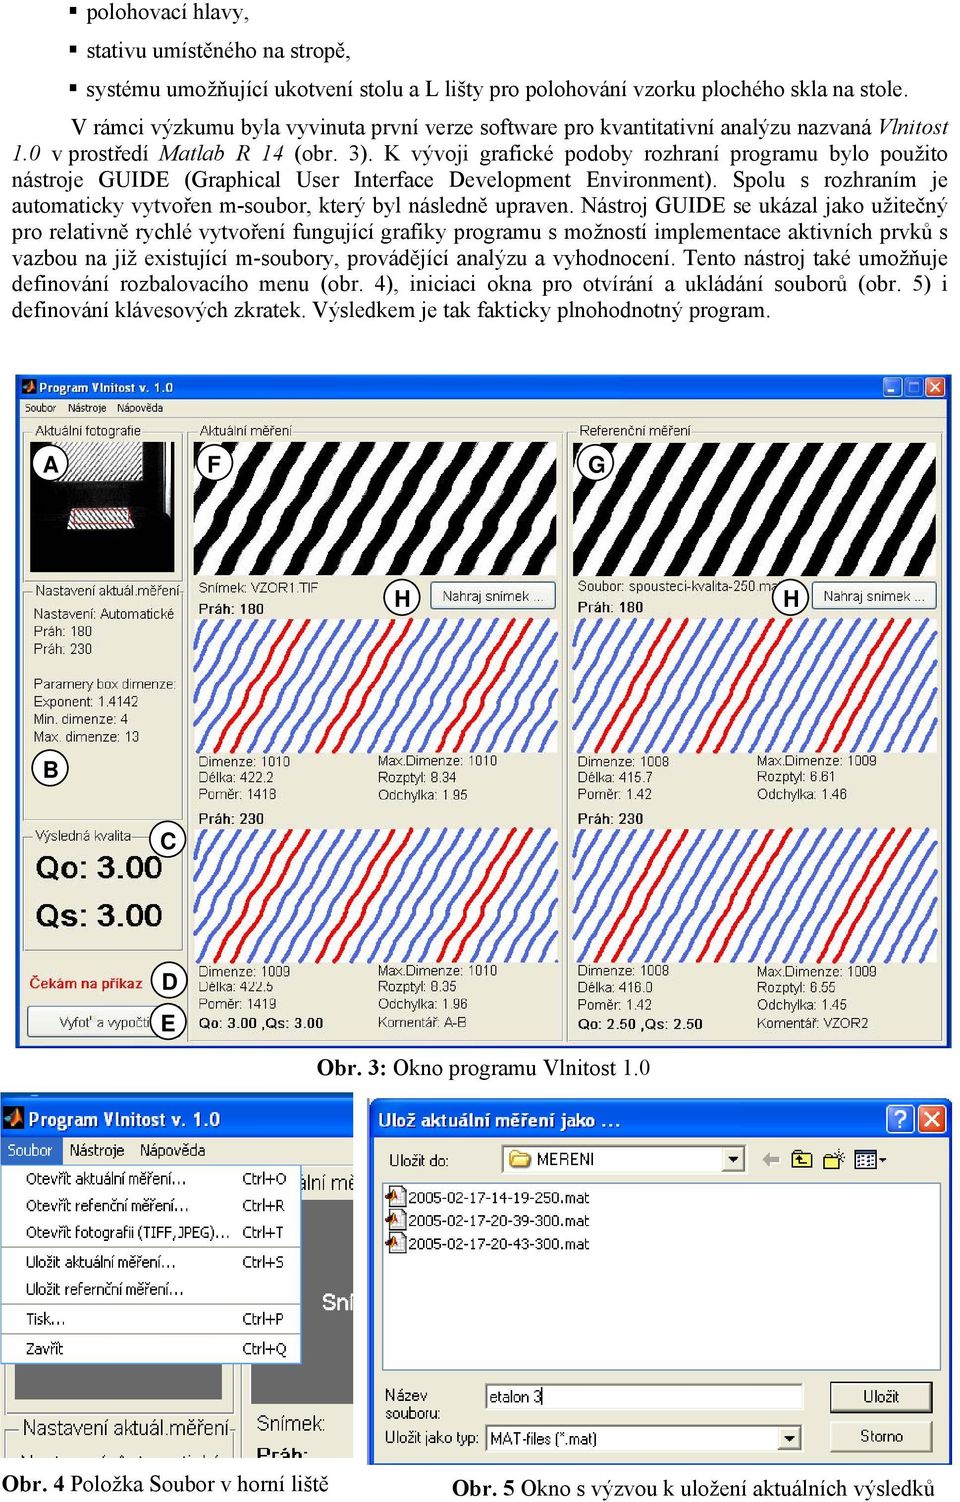 K vývoji grafické podoby rozhraní programu bylo použito nástroje GUIDE (Graphical User Interface Development Environment).